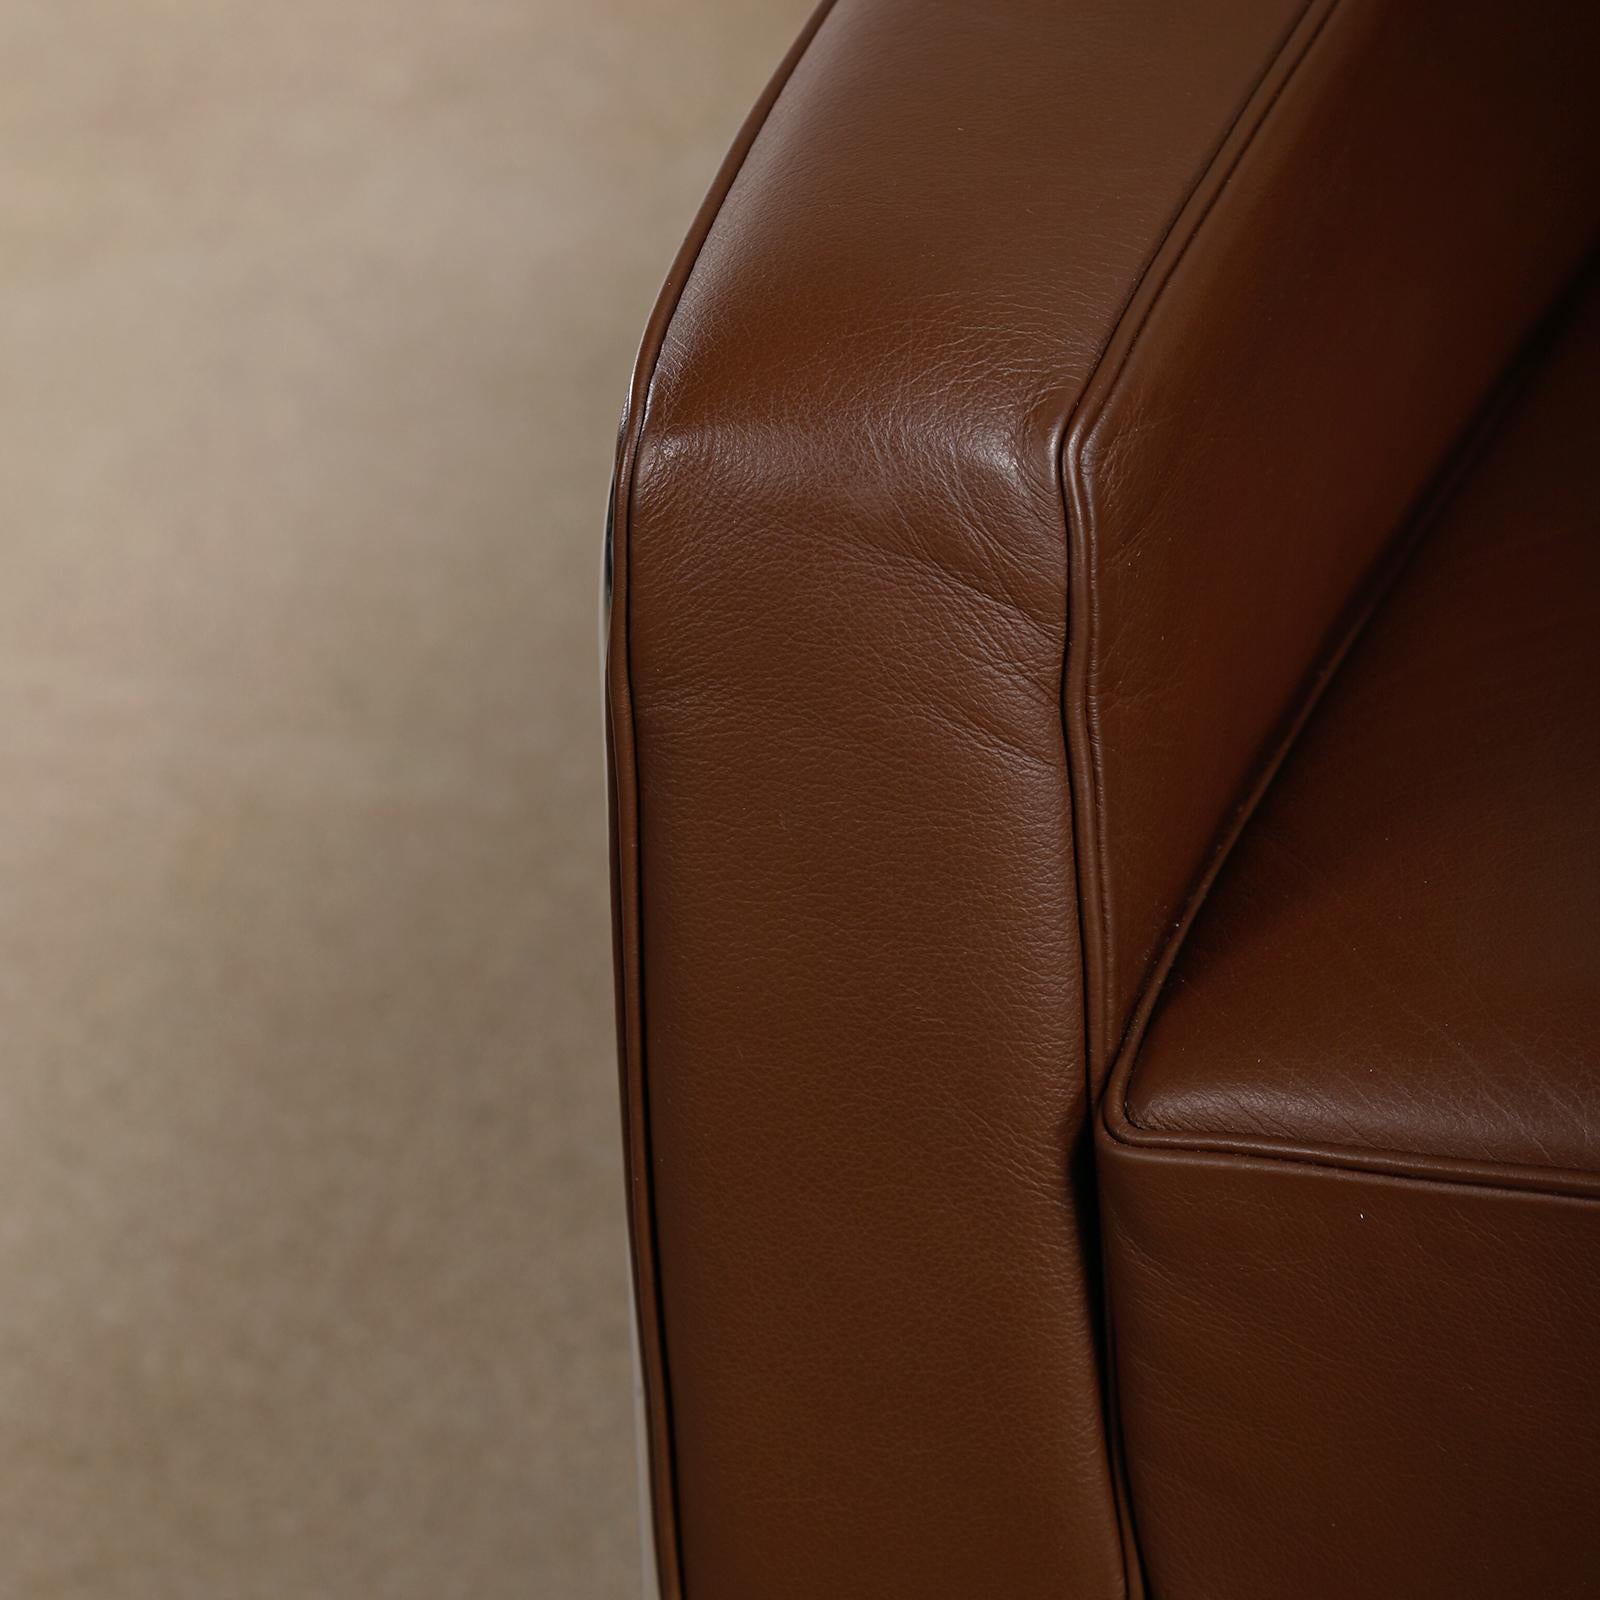 Arne Jacobsen Lounge Chair 3300 Series in Chestnut leather for Fritz Hansen For Sale 3